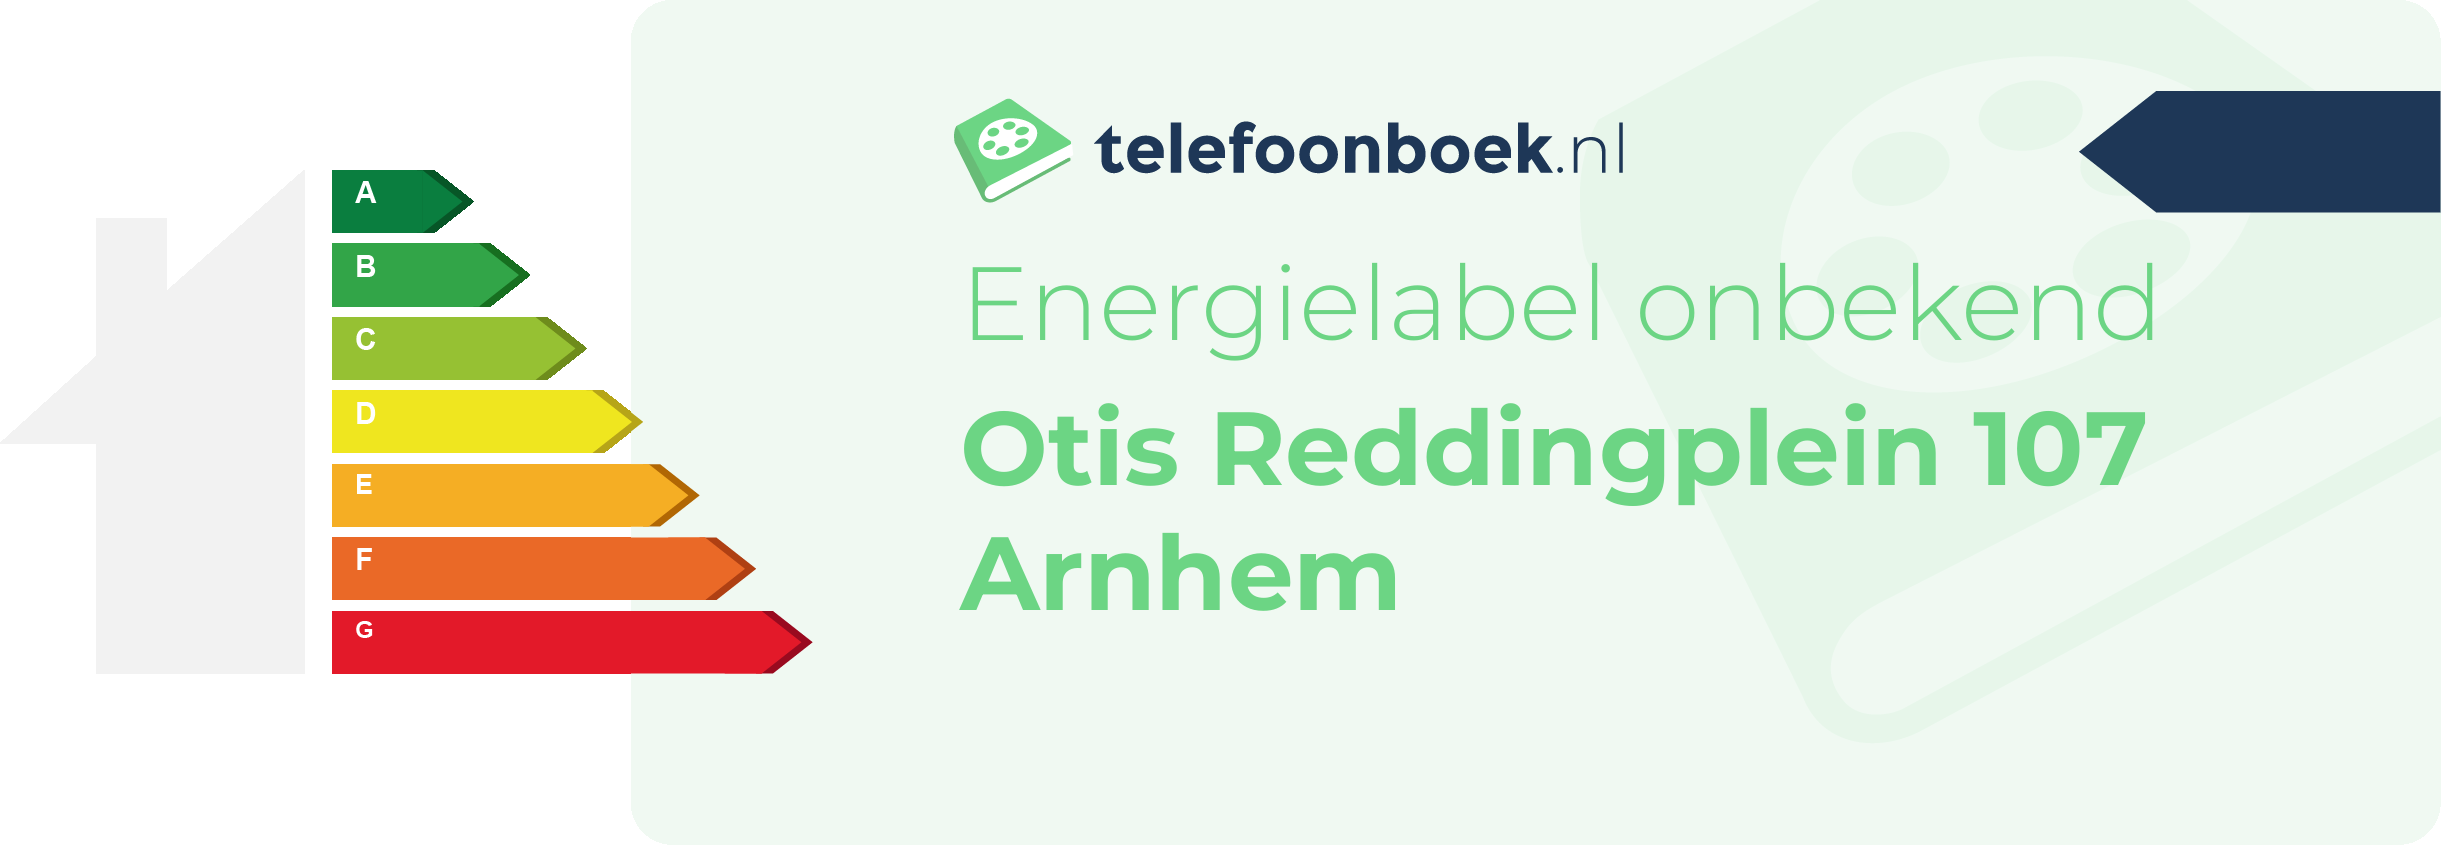 Energielabel Otis Reddingplein 107 Arnhem